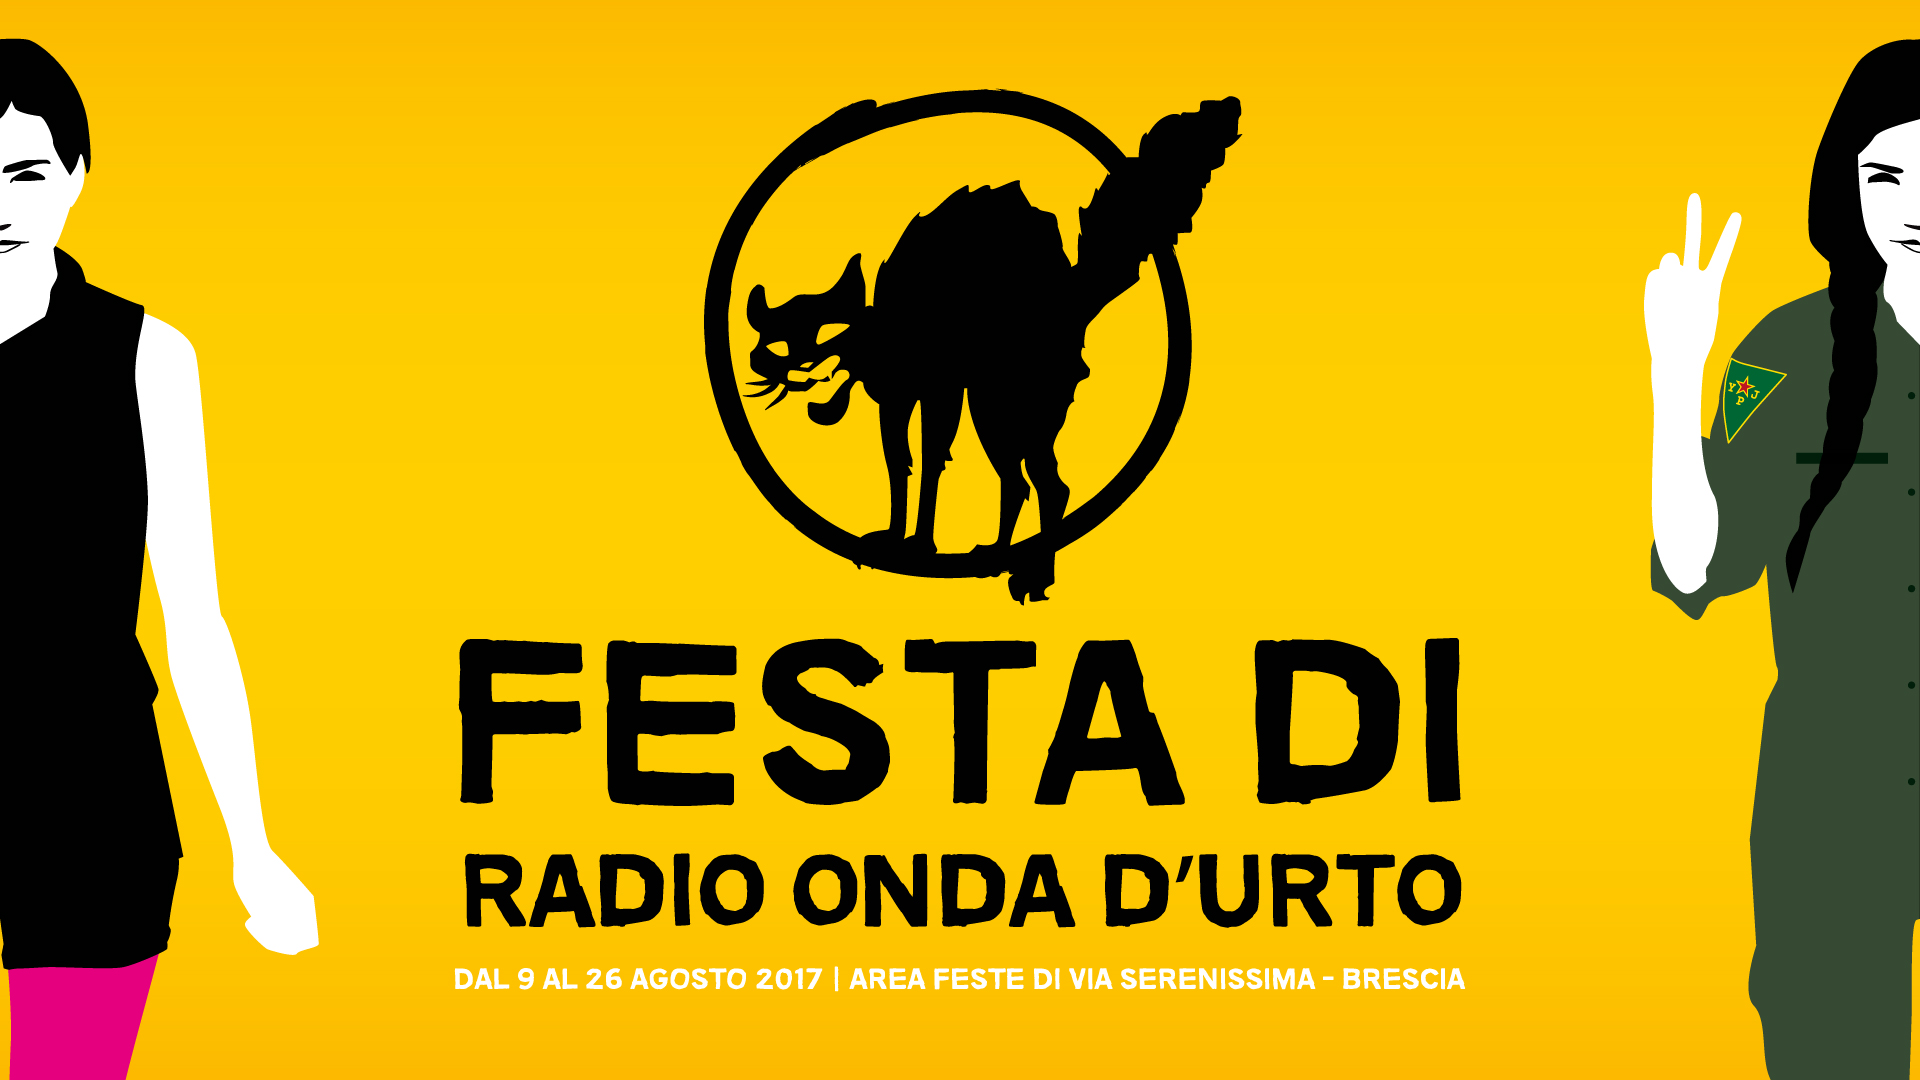 Live @ Festa Radio Onda d’Urto 2017 – 14 agosto